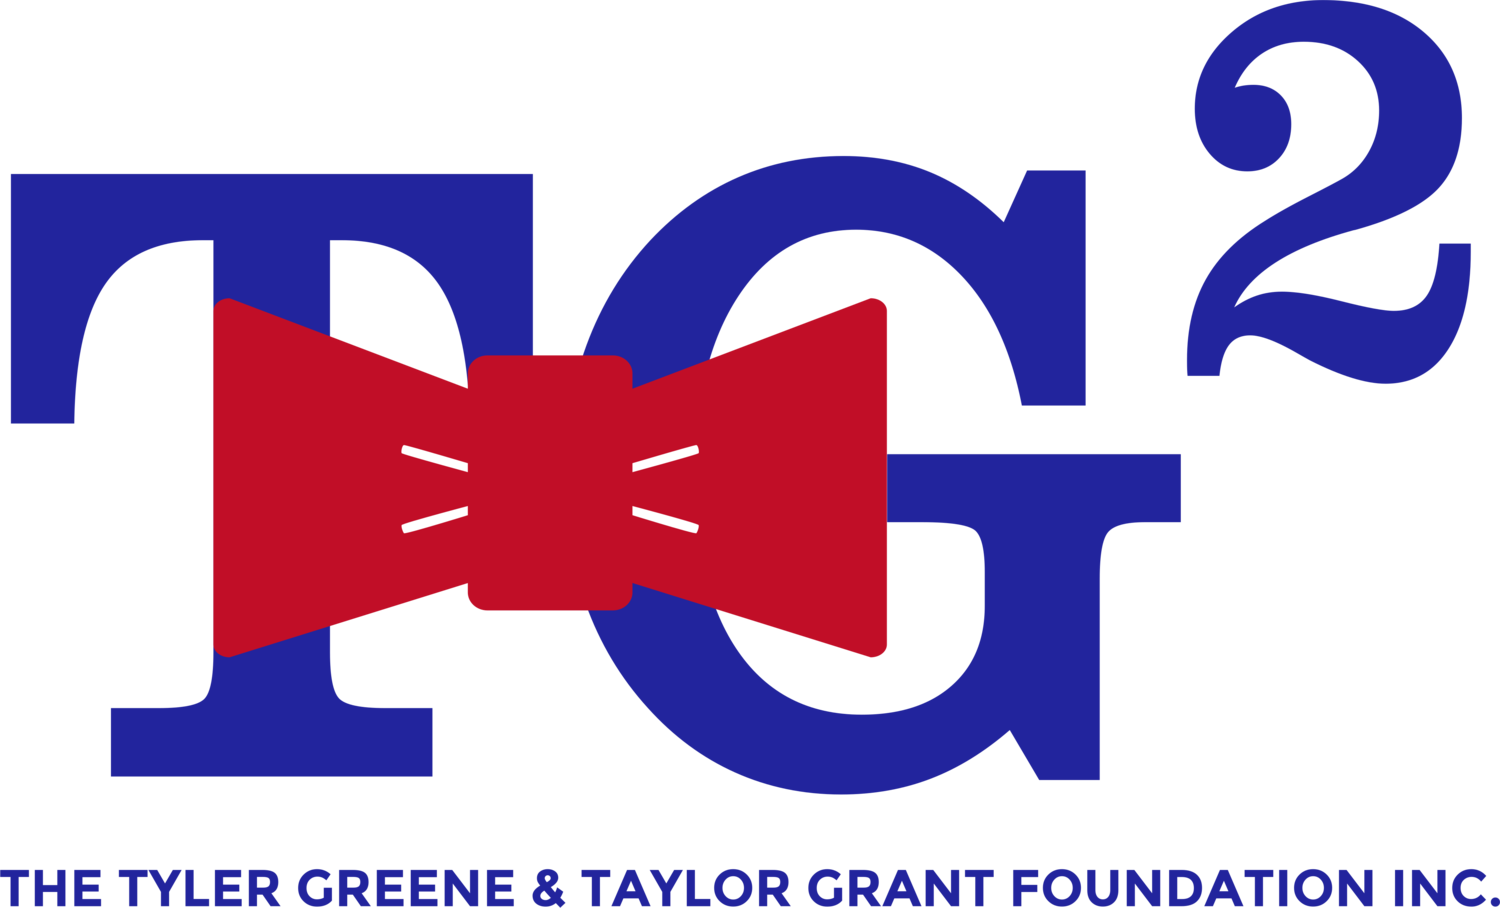 The Tyler Greene & Taylor Grant Foundation